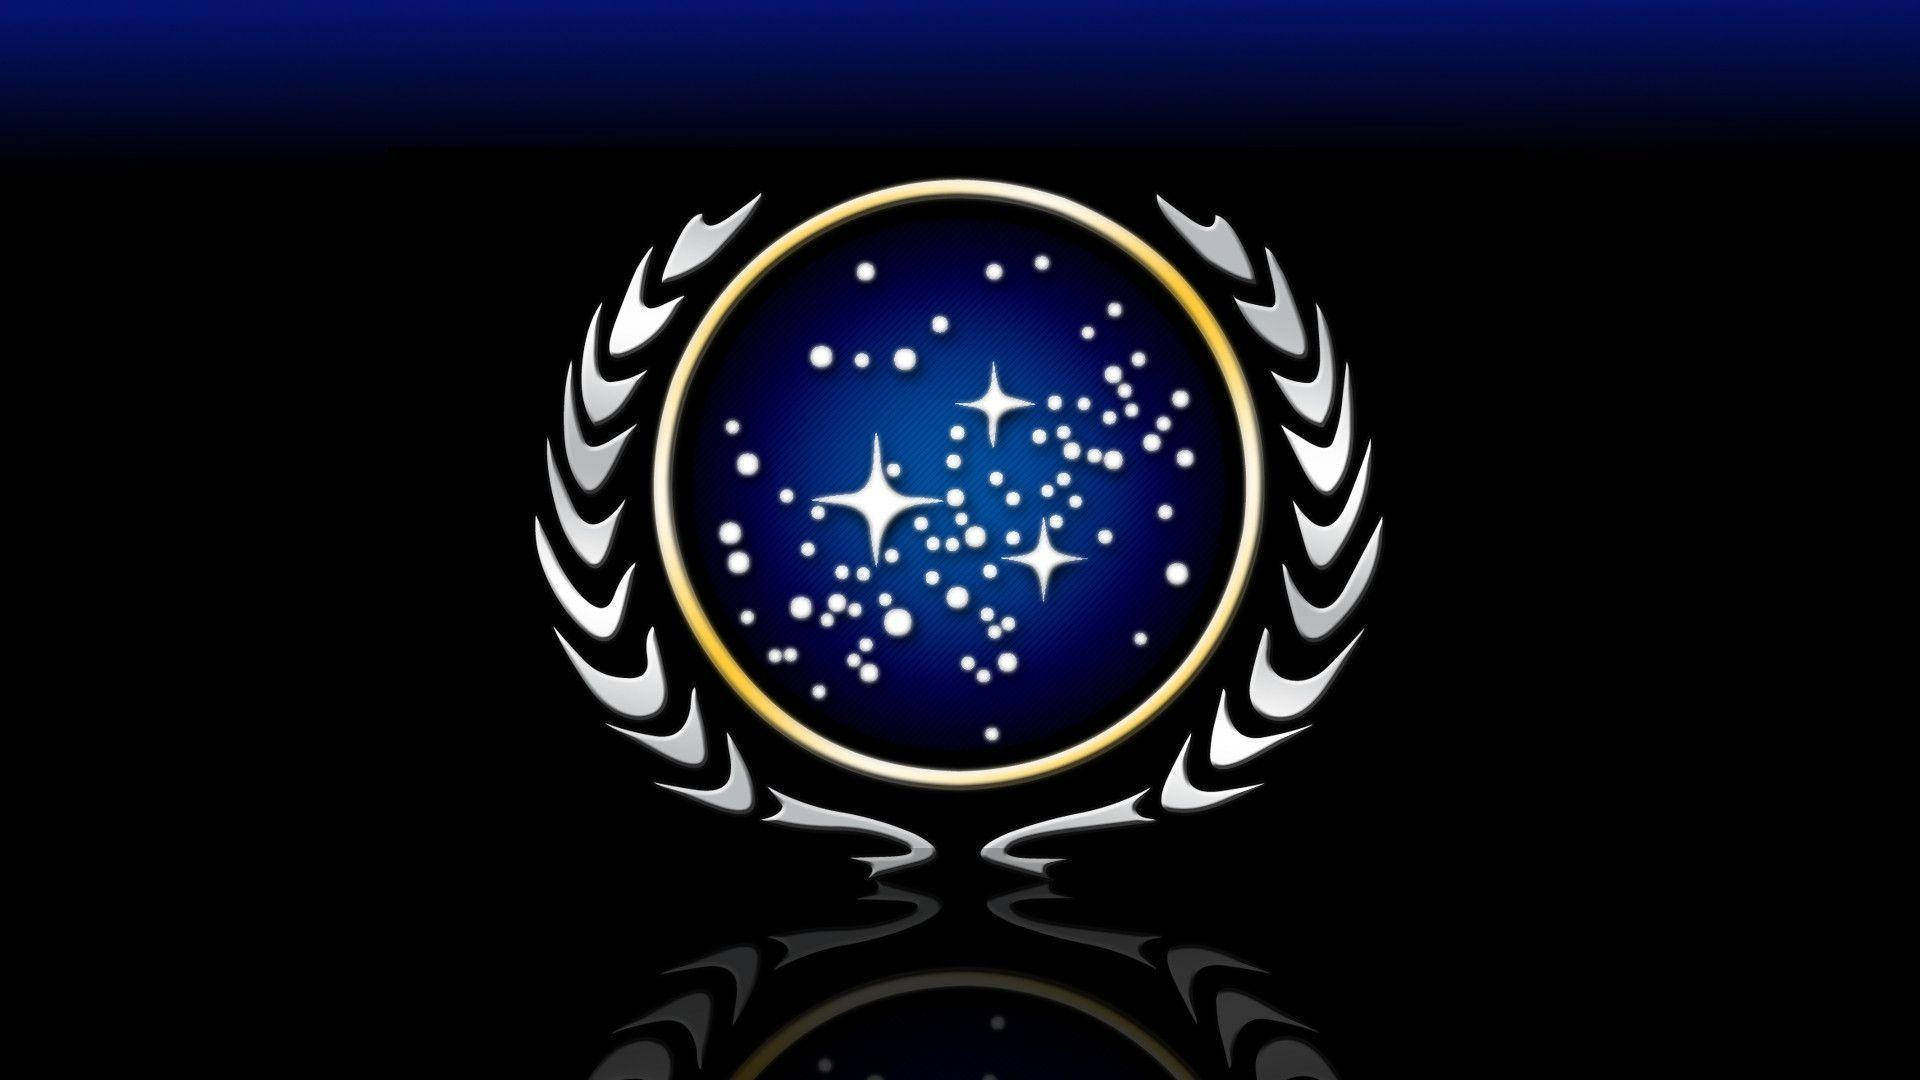 Star Trek wallpaper of The United Federation of Planets logo. 